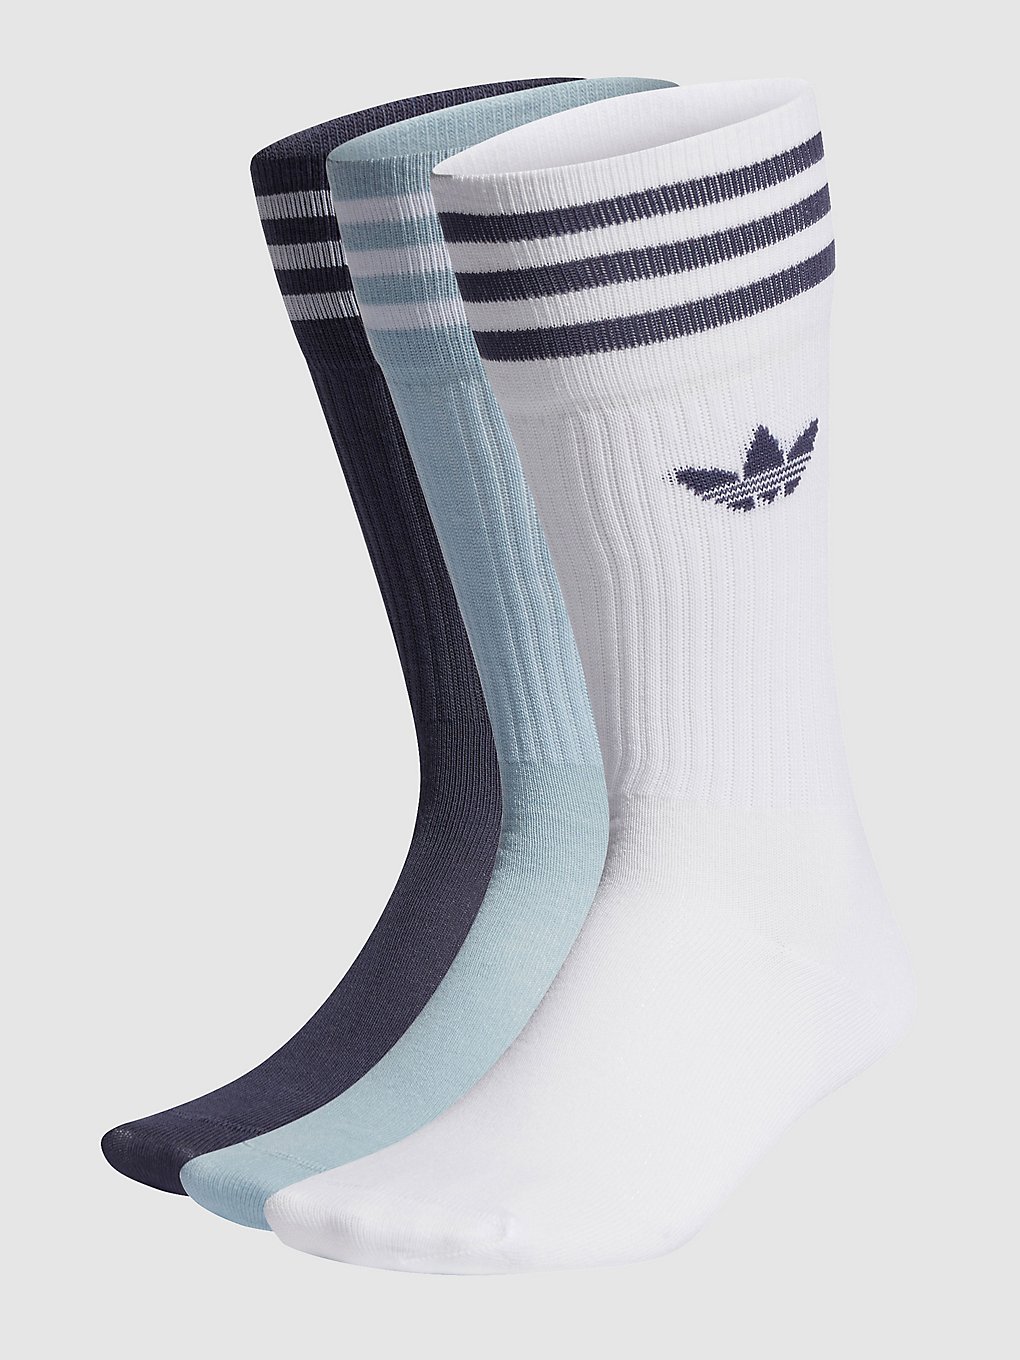 Adidas Originals Solid Crew Socks shadow nvy